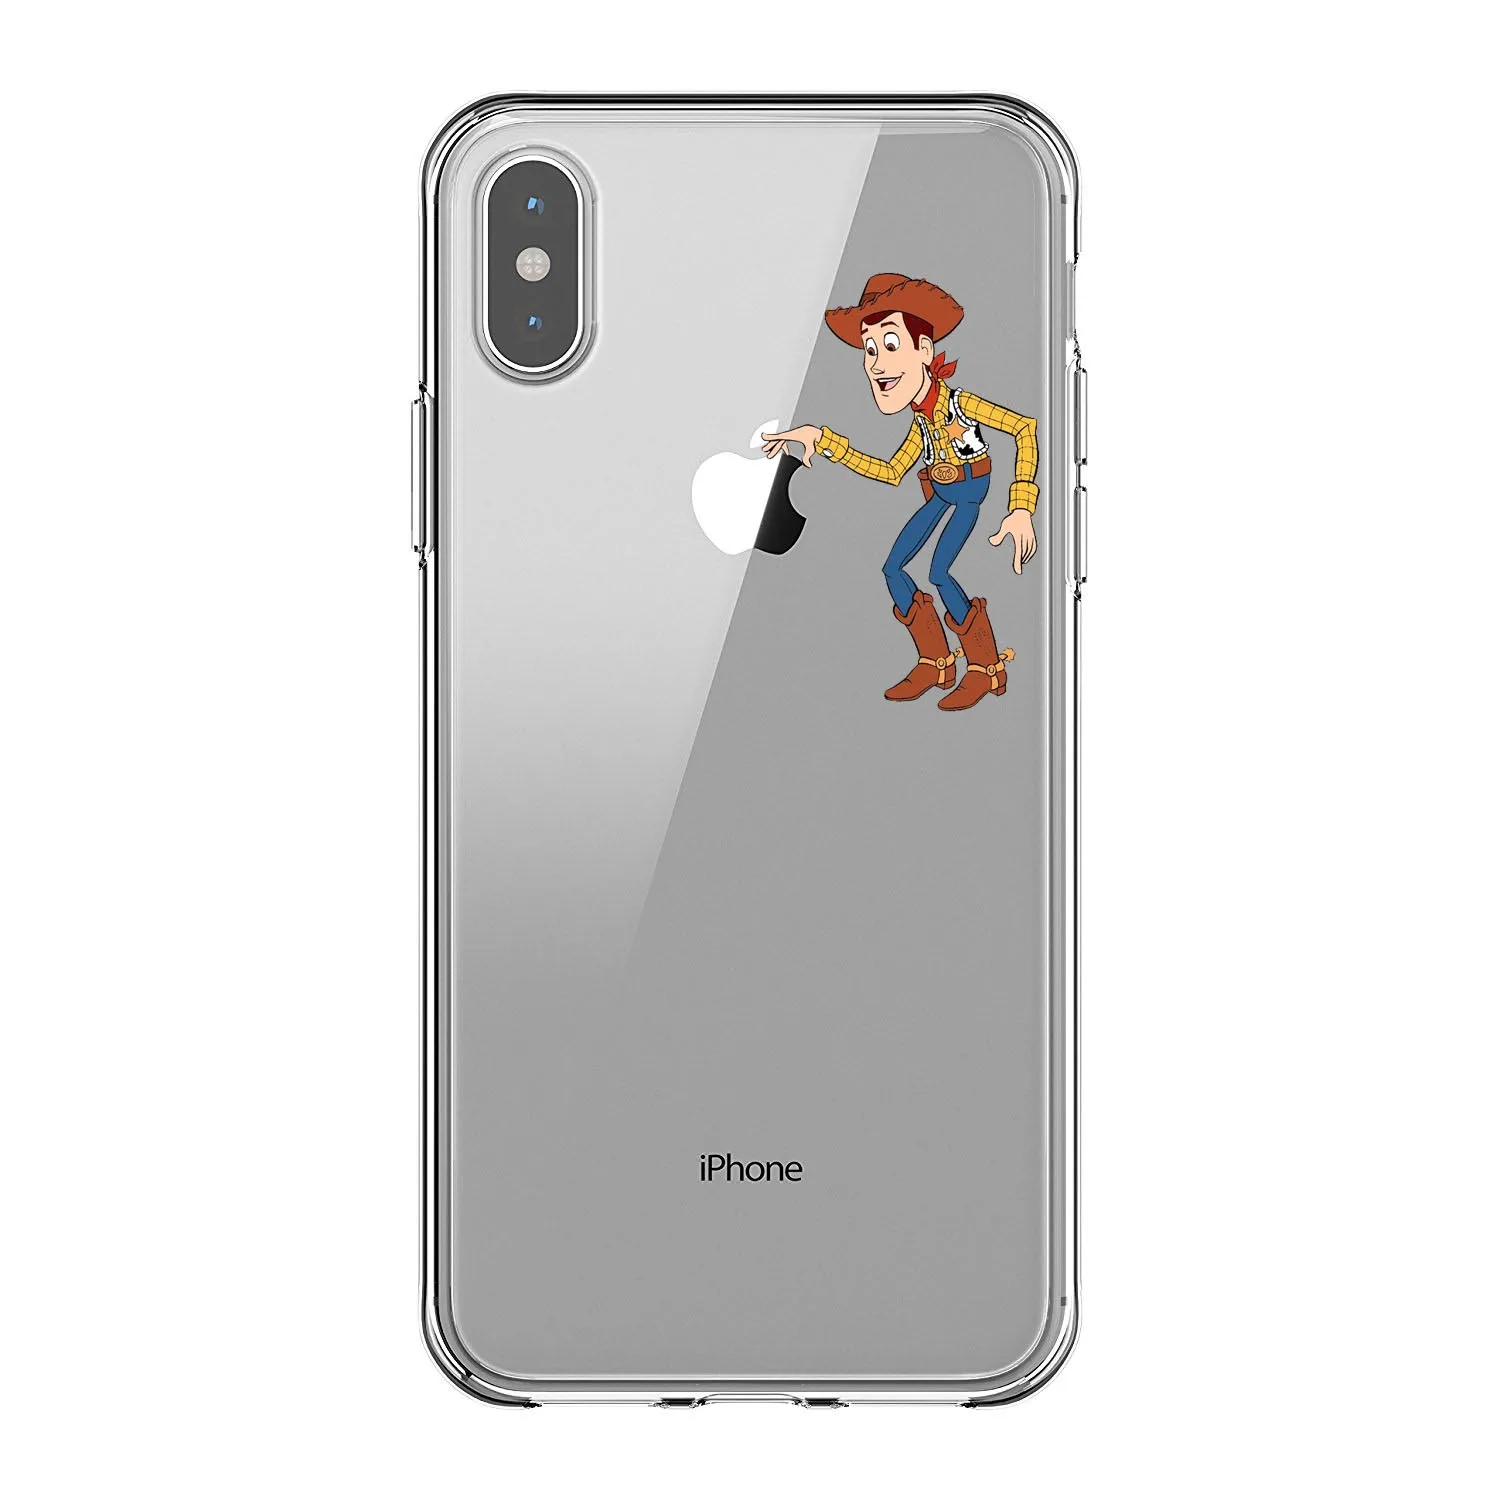 Cowboy Woody Buzz Lightyear Toy Story Мягкие силиконовые чехлы для телефонов из ТПУ для iPhone X 5 5S SE 6 6S Plus 7 8 Plus XS XR XS MAX - Цвет: TPU